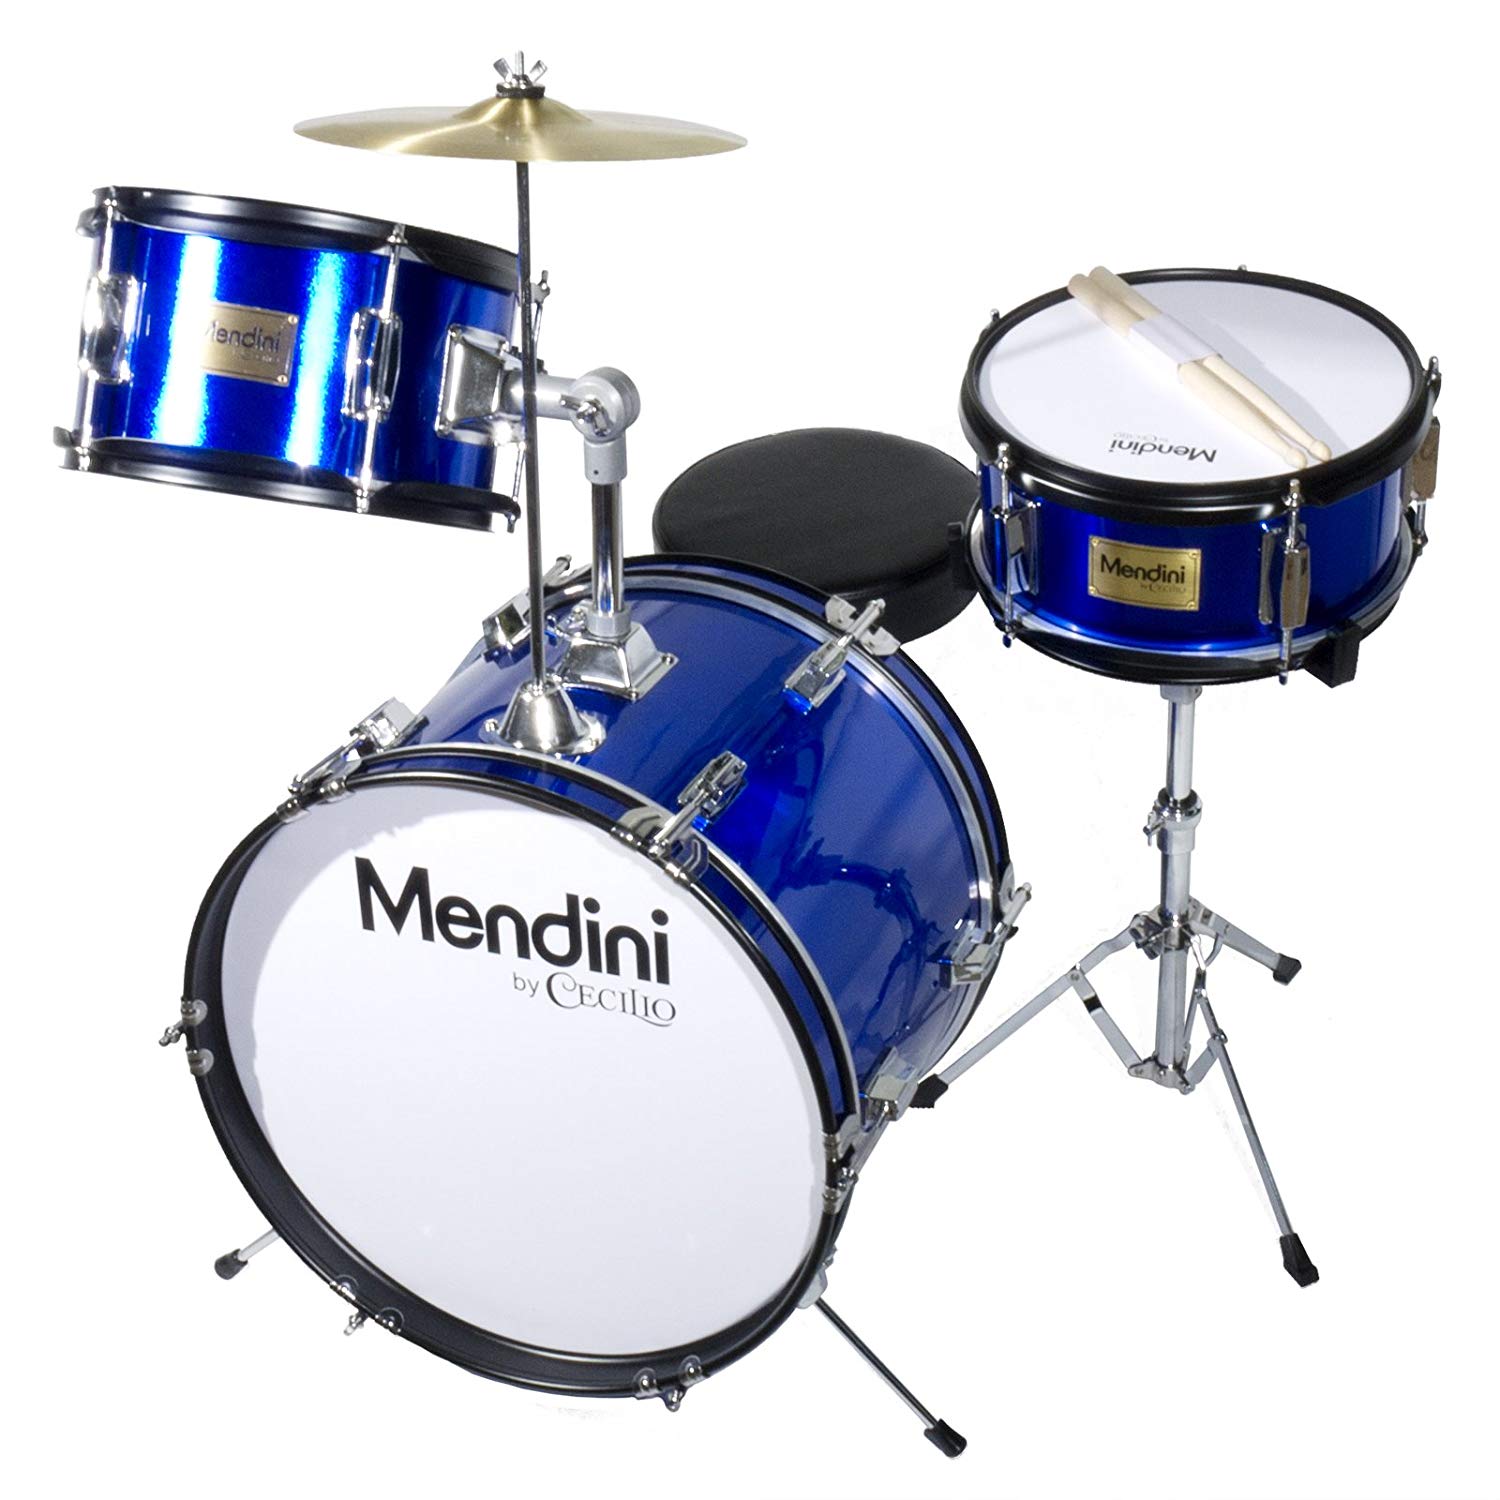 Mendini by Cecilio 16 inch 5-Piece Kids/Junior Drum Set